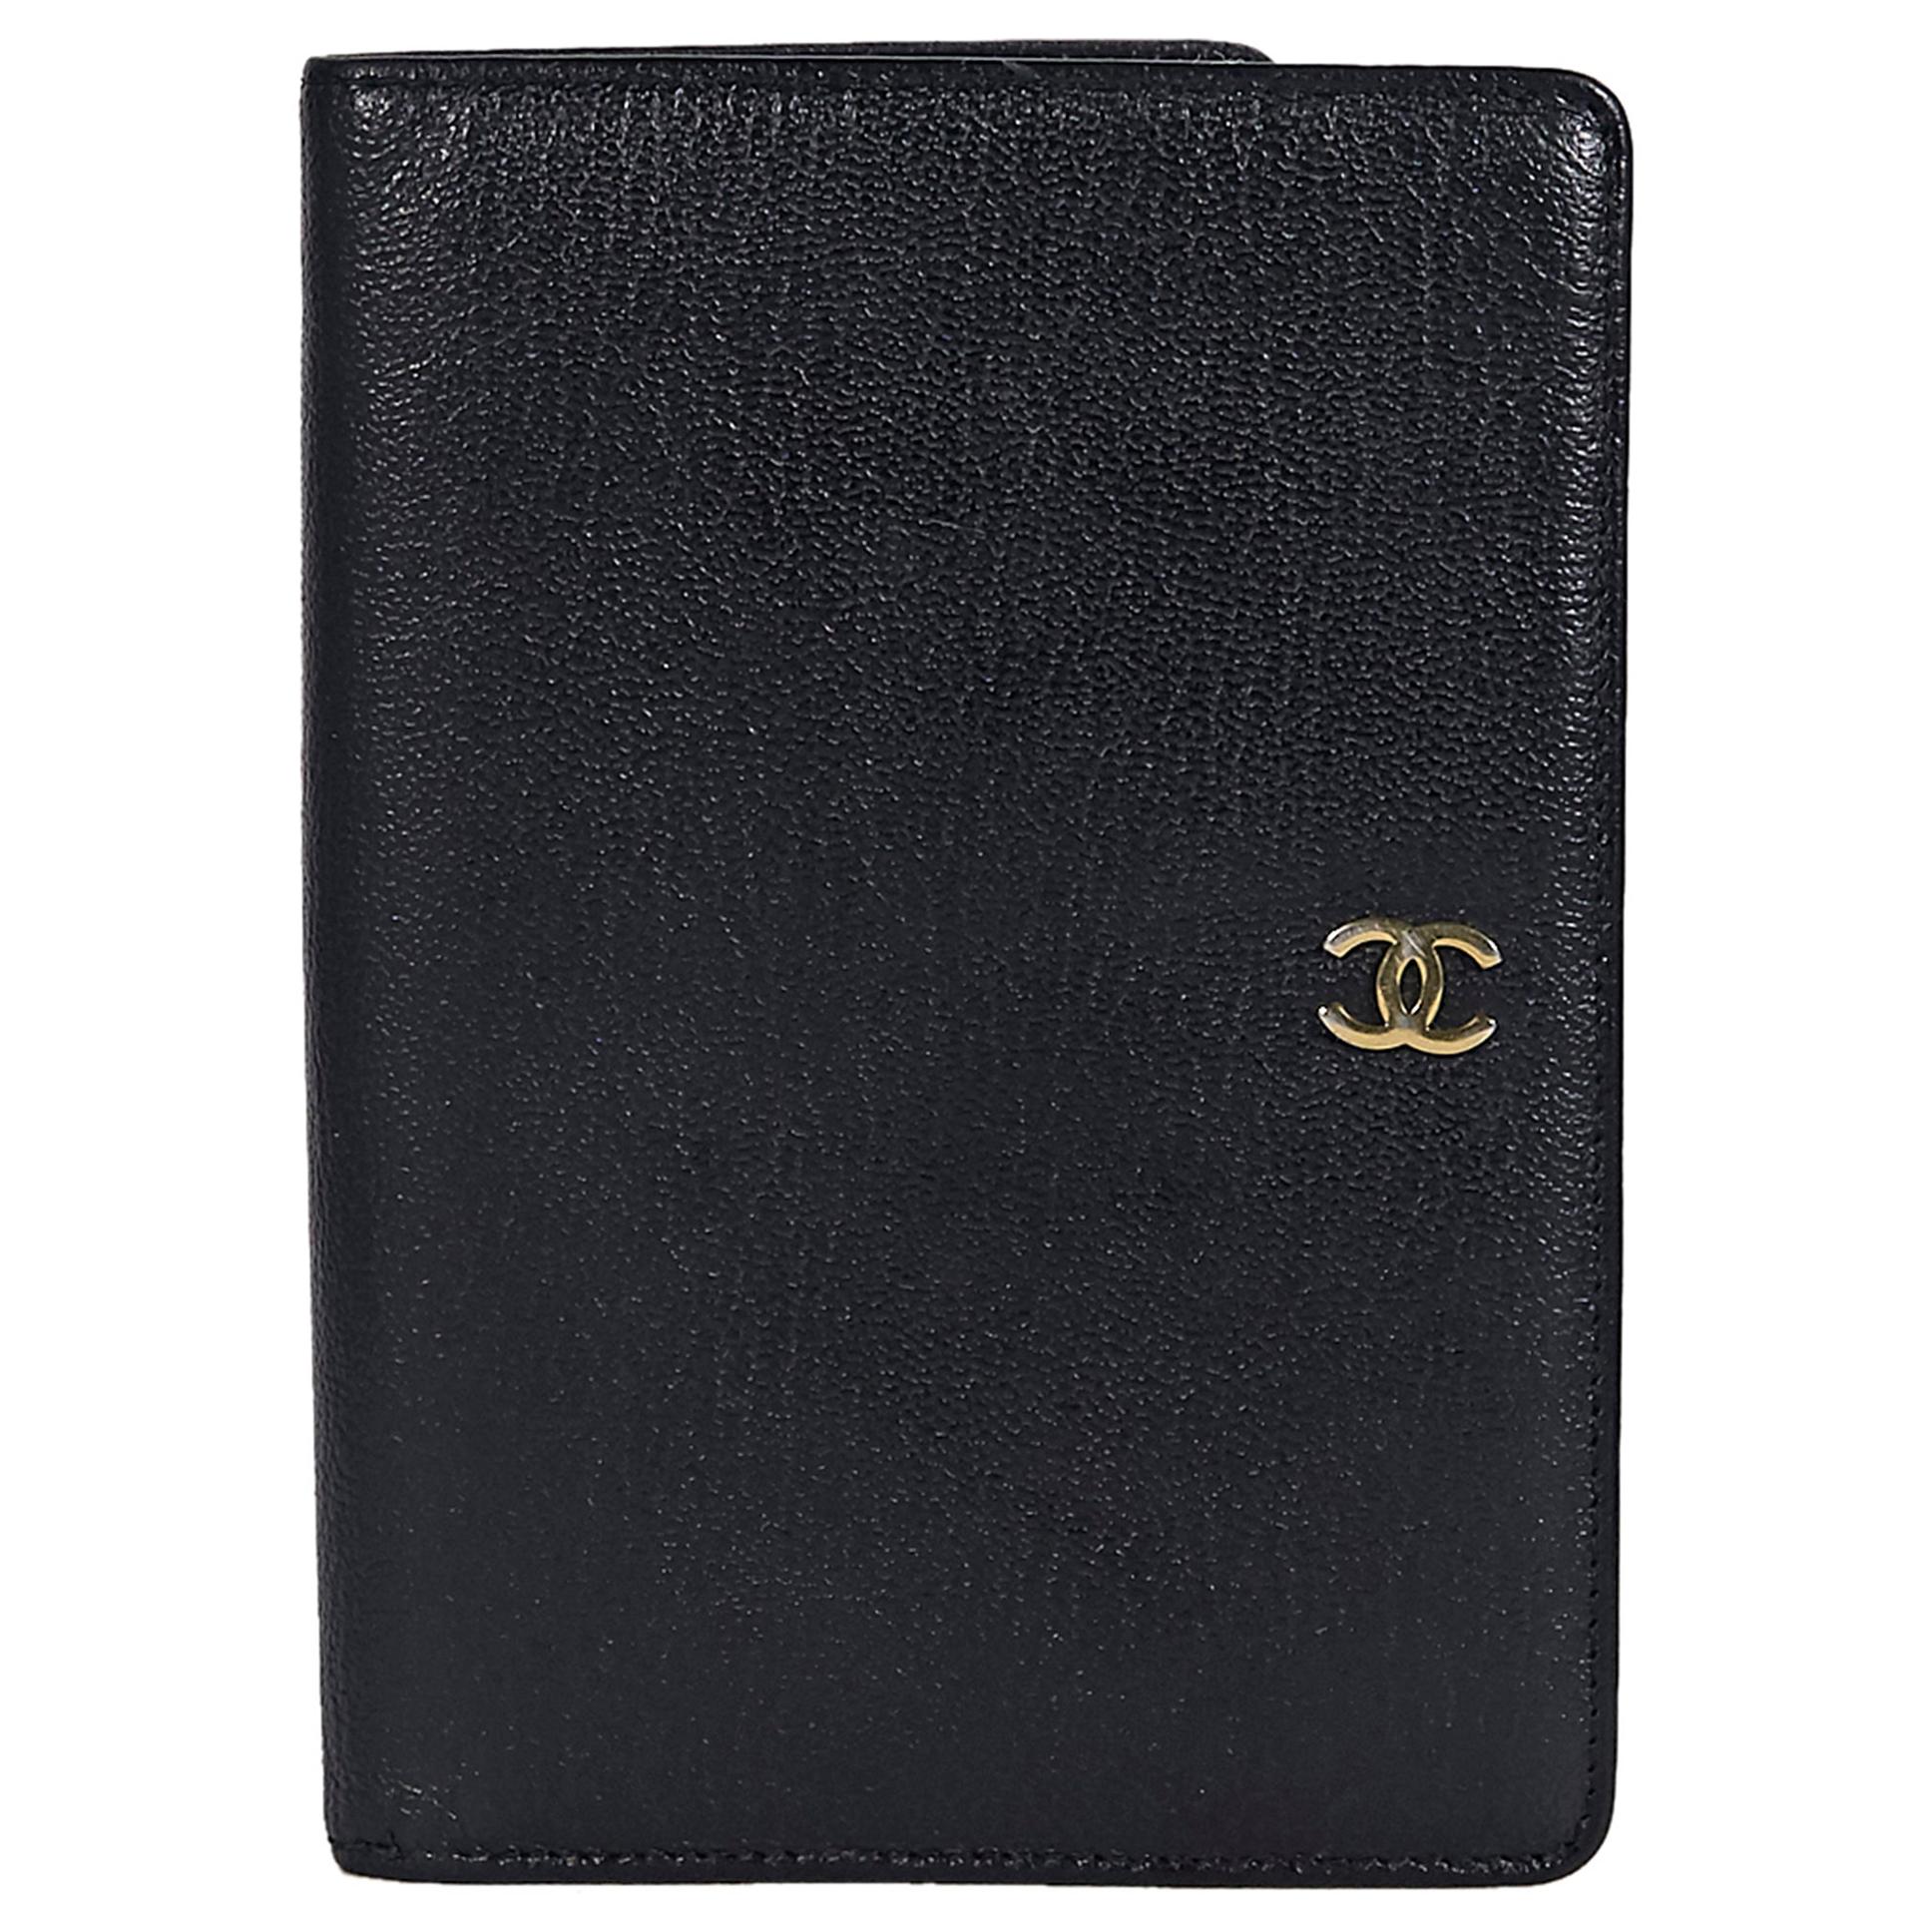 Chanel Black Leather Bifold Wallet